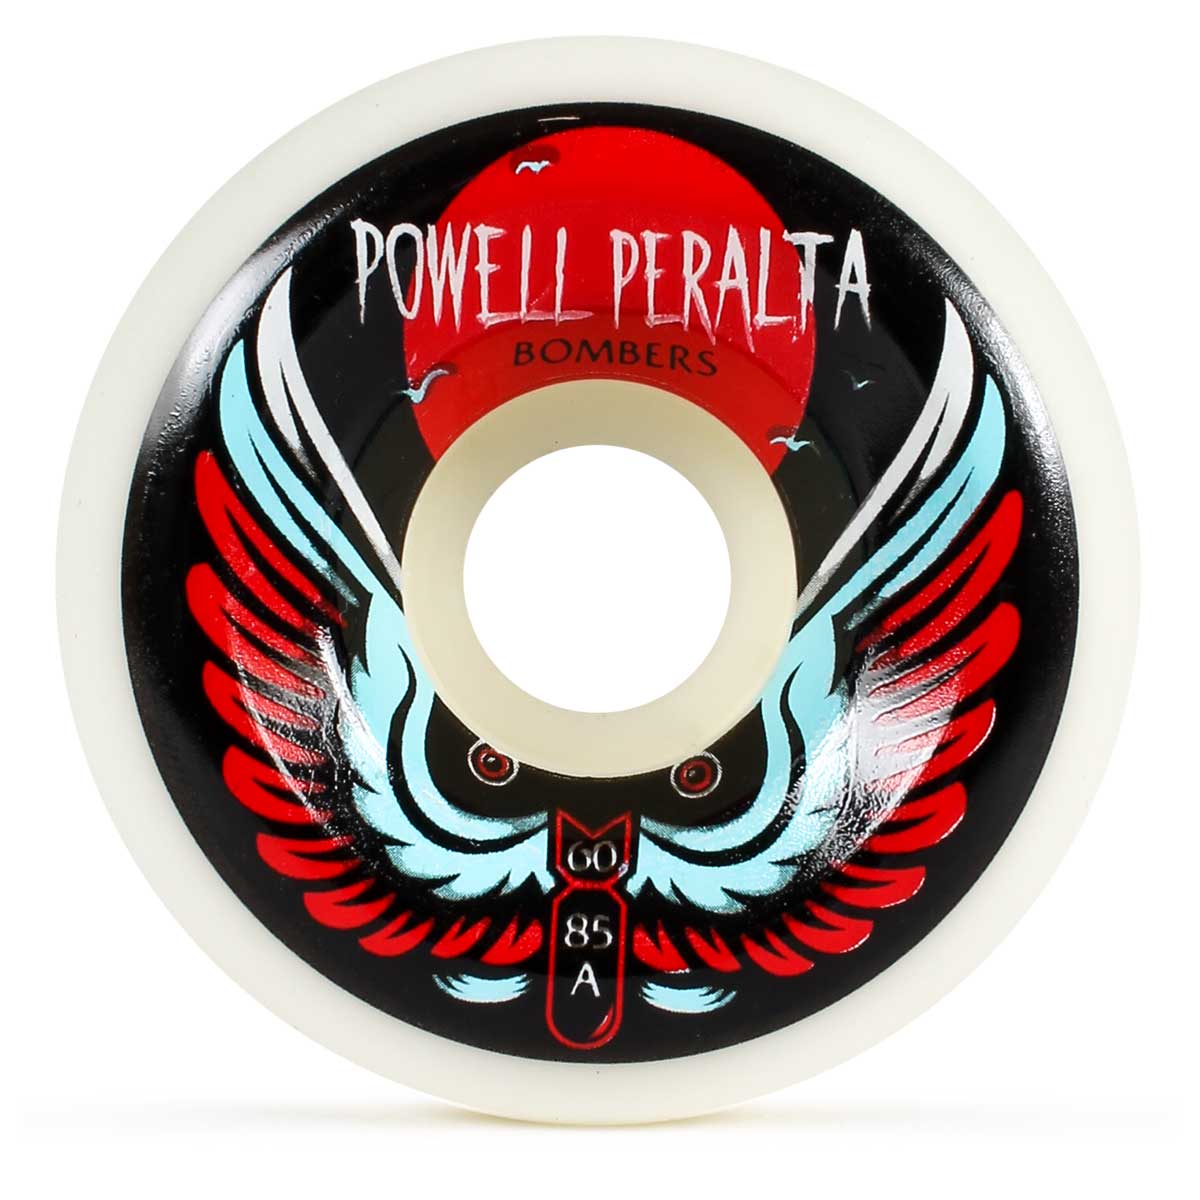 Powell Peralta Bomber III Cruiser Wheels - White 60mm 85a | SoCal